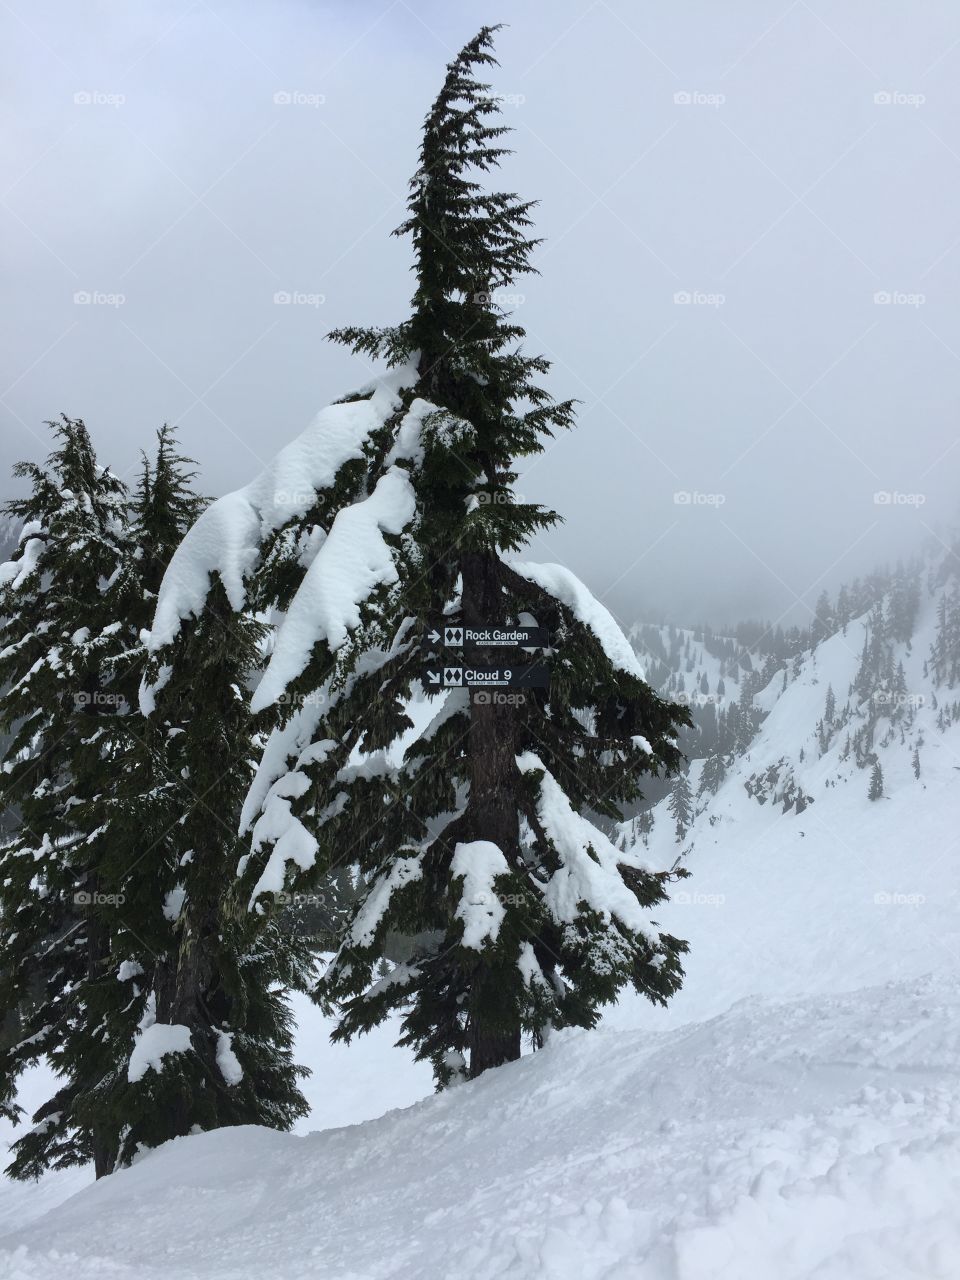 Steven pass, snowy mountain, evergreen trees, trees, snow, ice, snowboarding, ski, skiing, snowing, double black diamond, black diamond, hardcore, fog